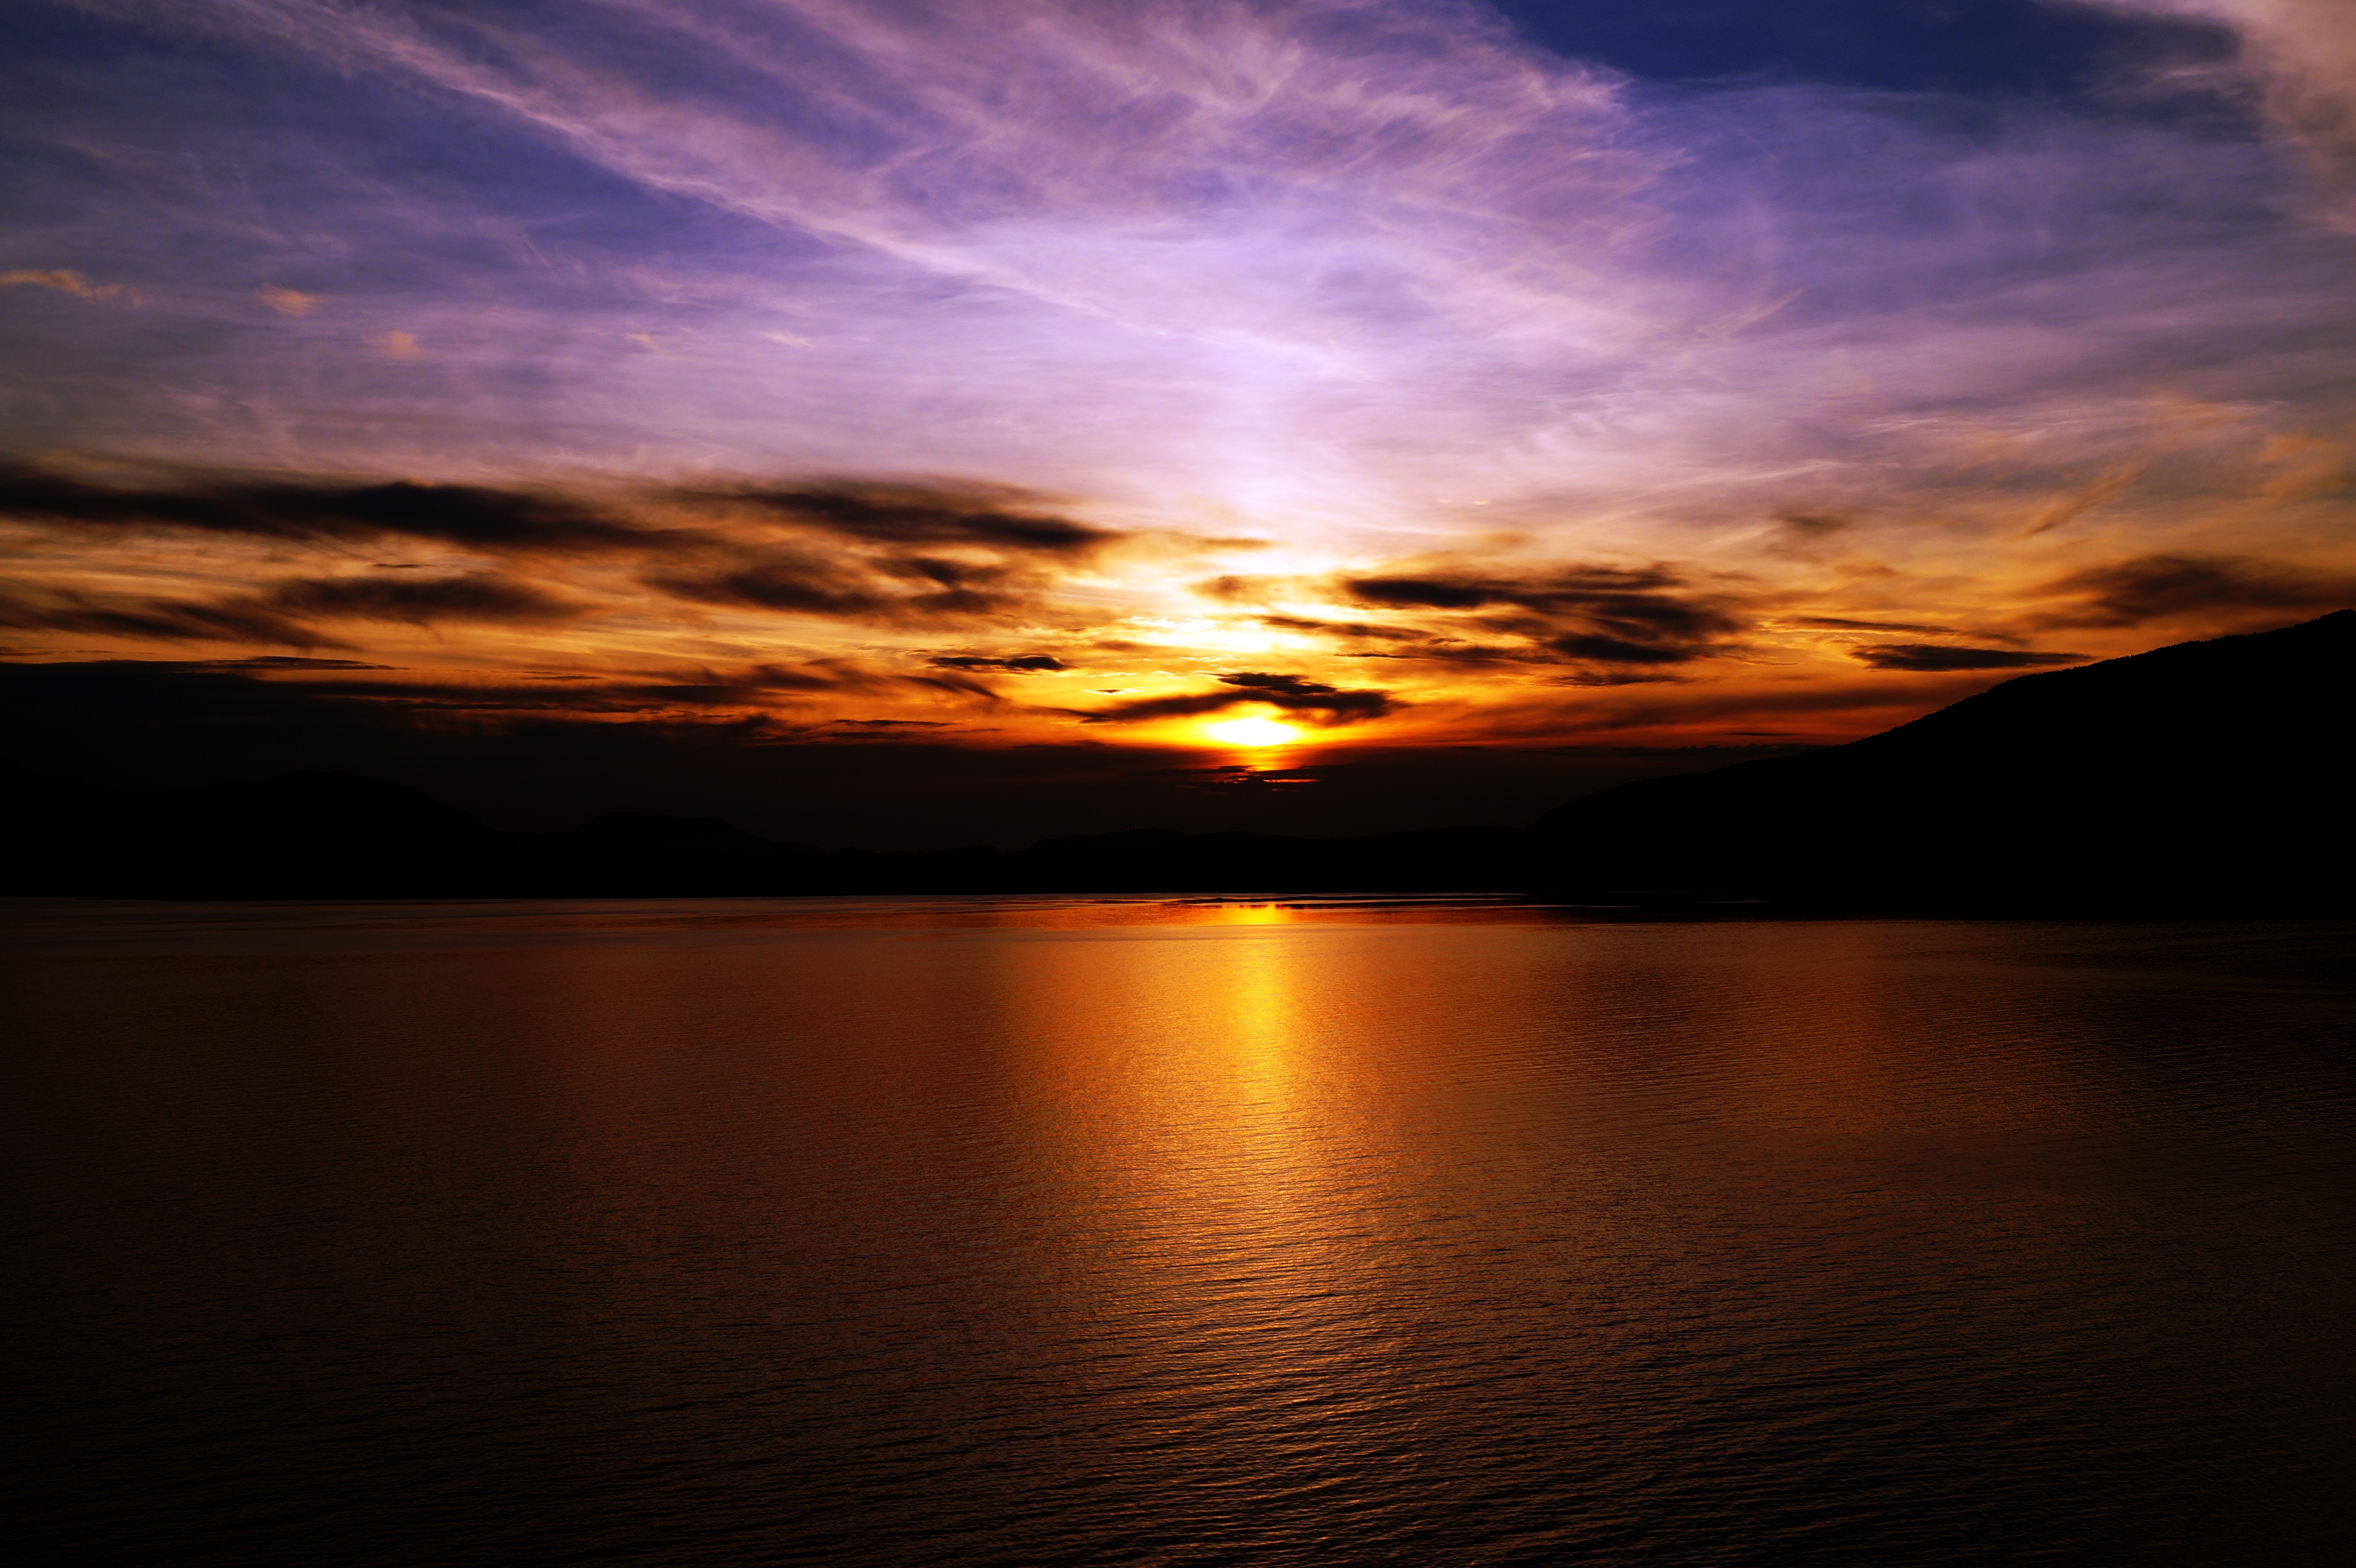 Бесплатное фото Солнце заходящие за тучи на озере